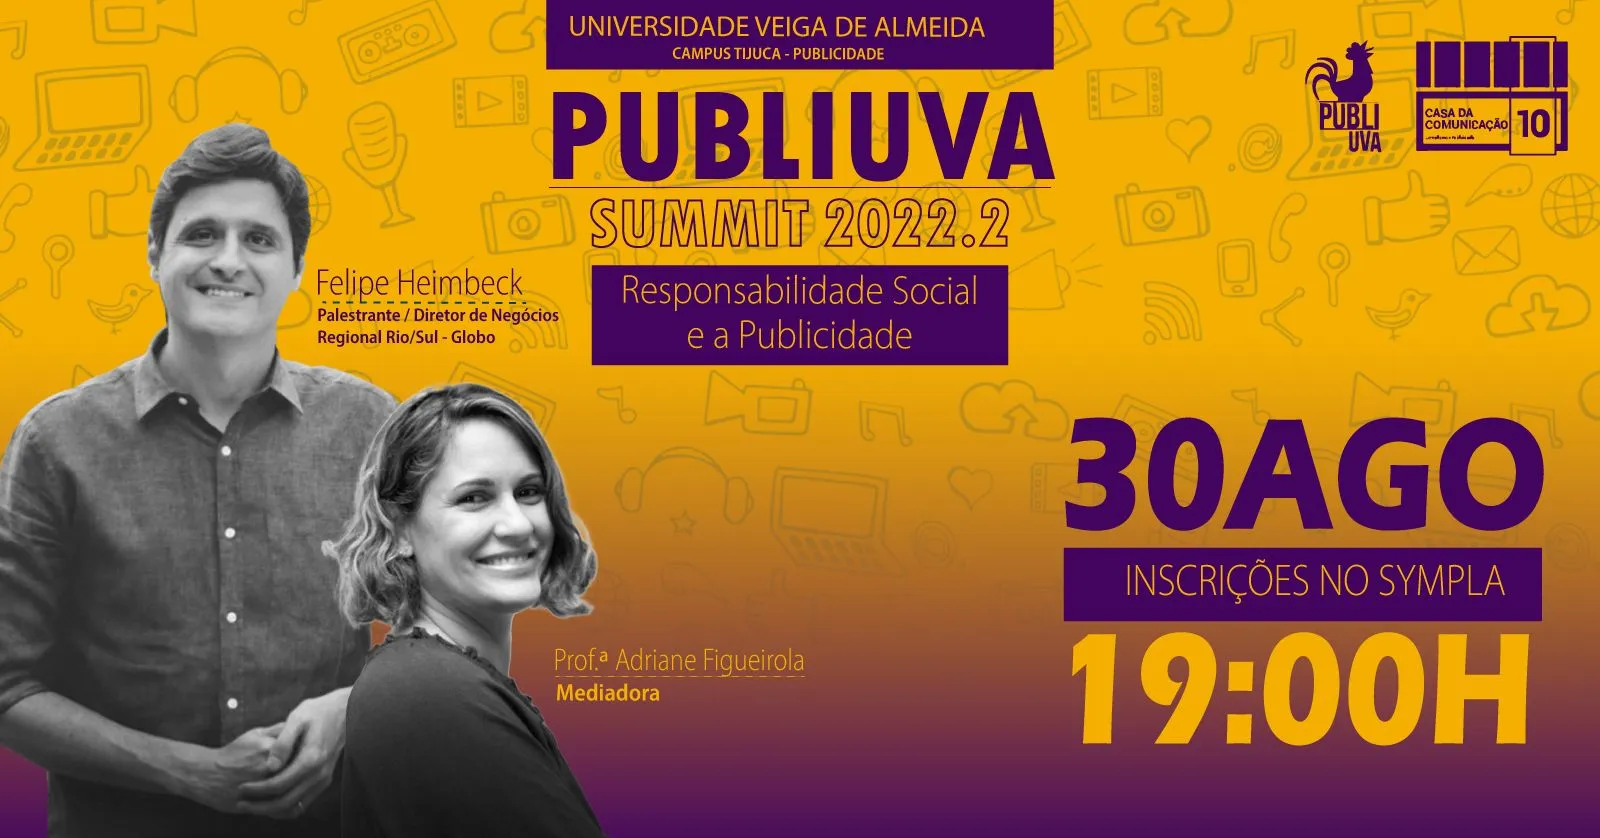 PubliUva Summit 2022.2 - Responsabilidade Social e Publicidade